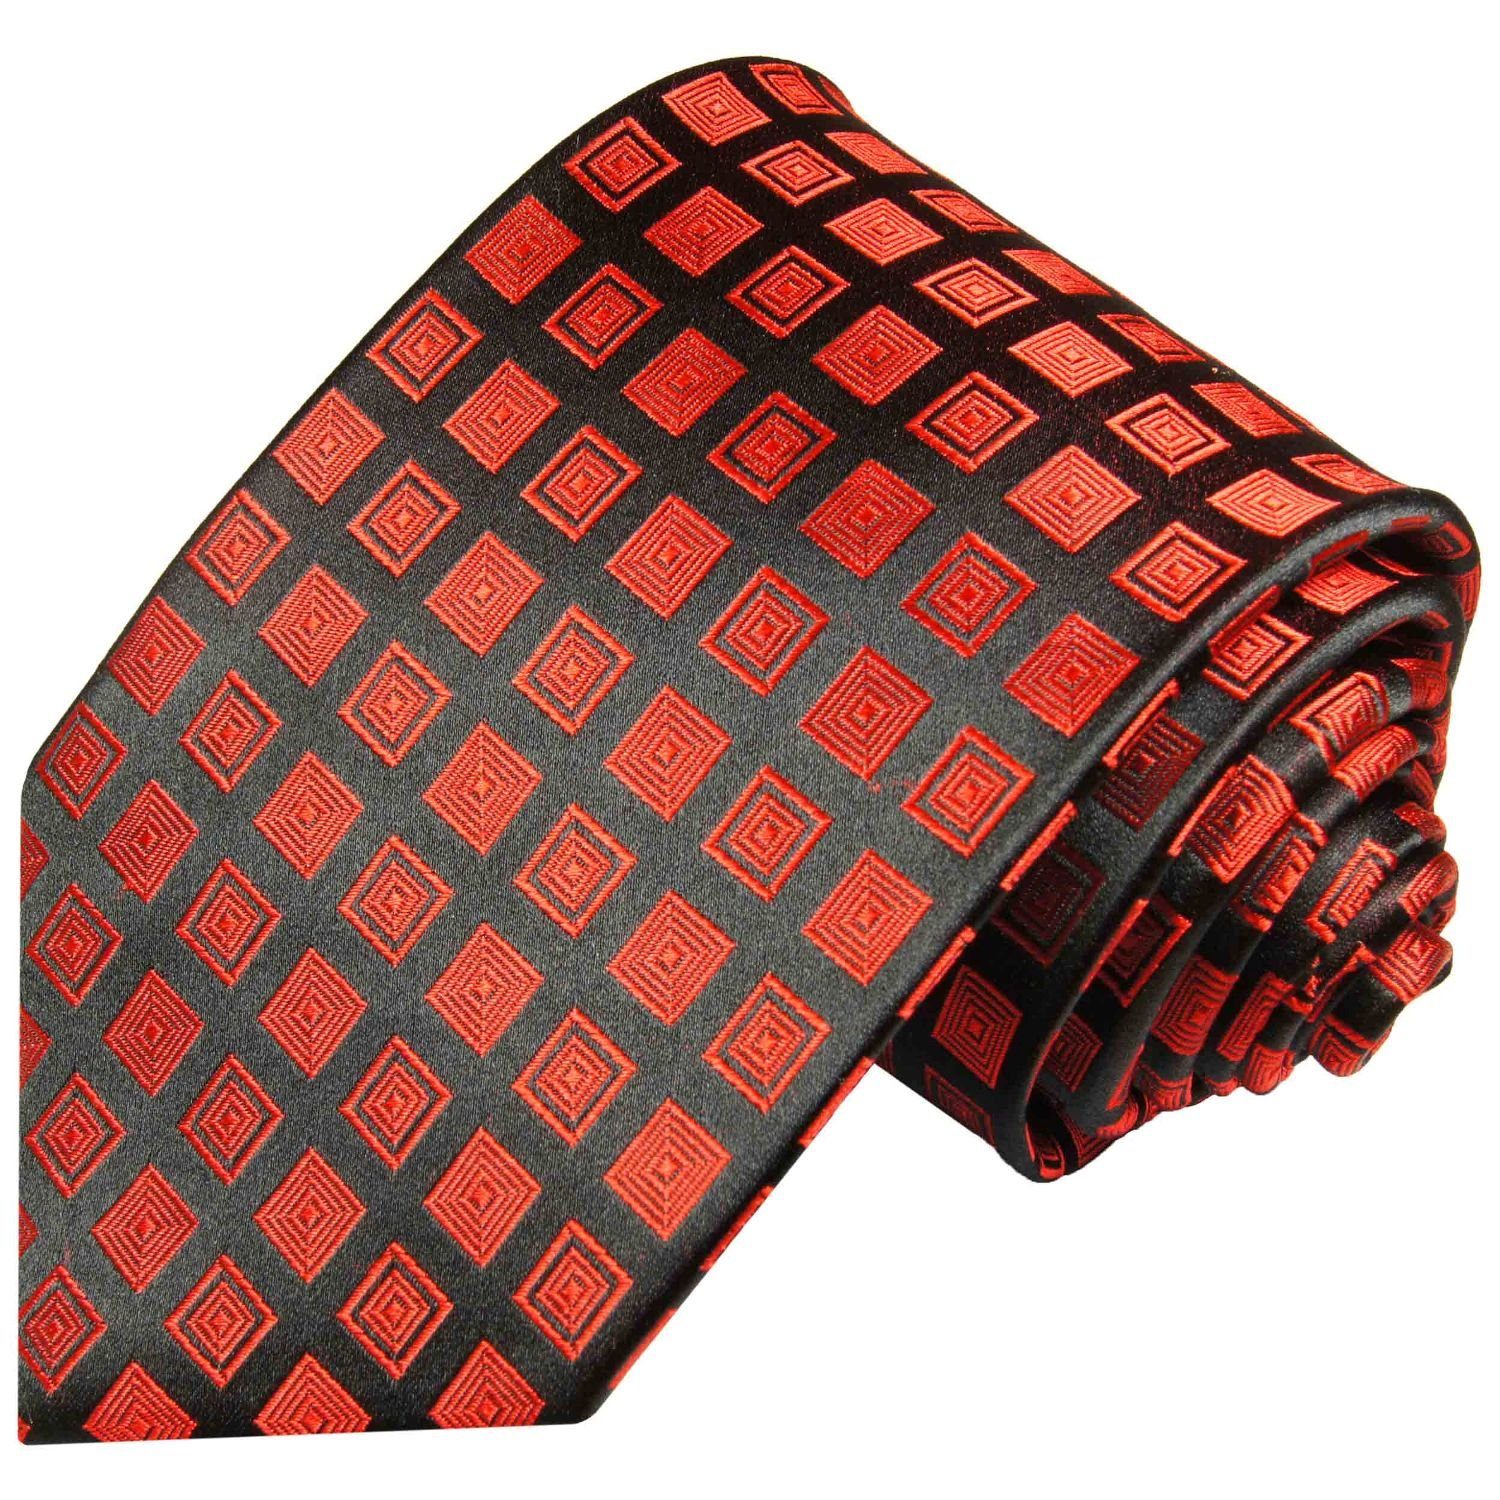 Paul Malone Krawatte Designer Seide kariert 764 Schlips schwarz 100% rot (8cm), Seidenkrawatte Breit Herren modern